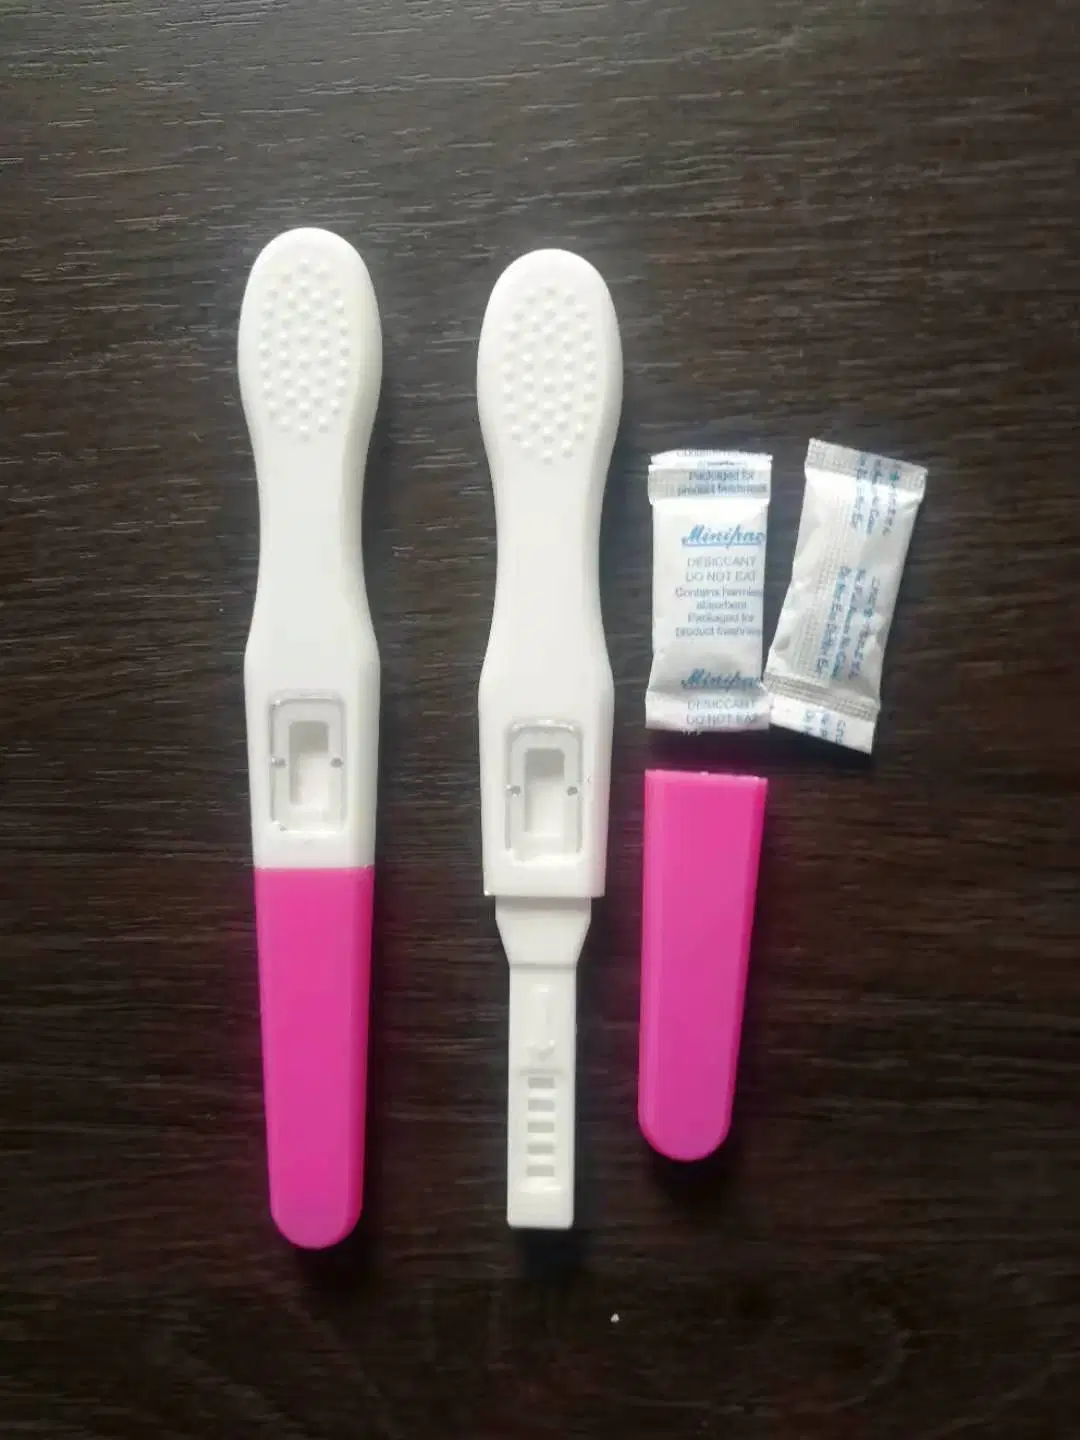 HCG Home Pregnancy Test Urine Pregnancy Test Strip Midstream 99.6% Accuracy Test